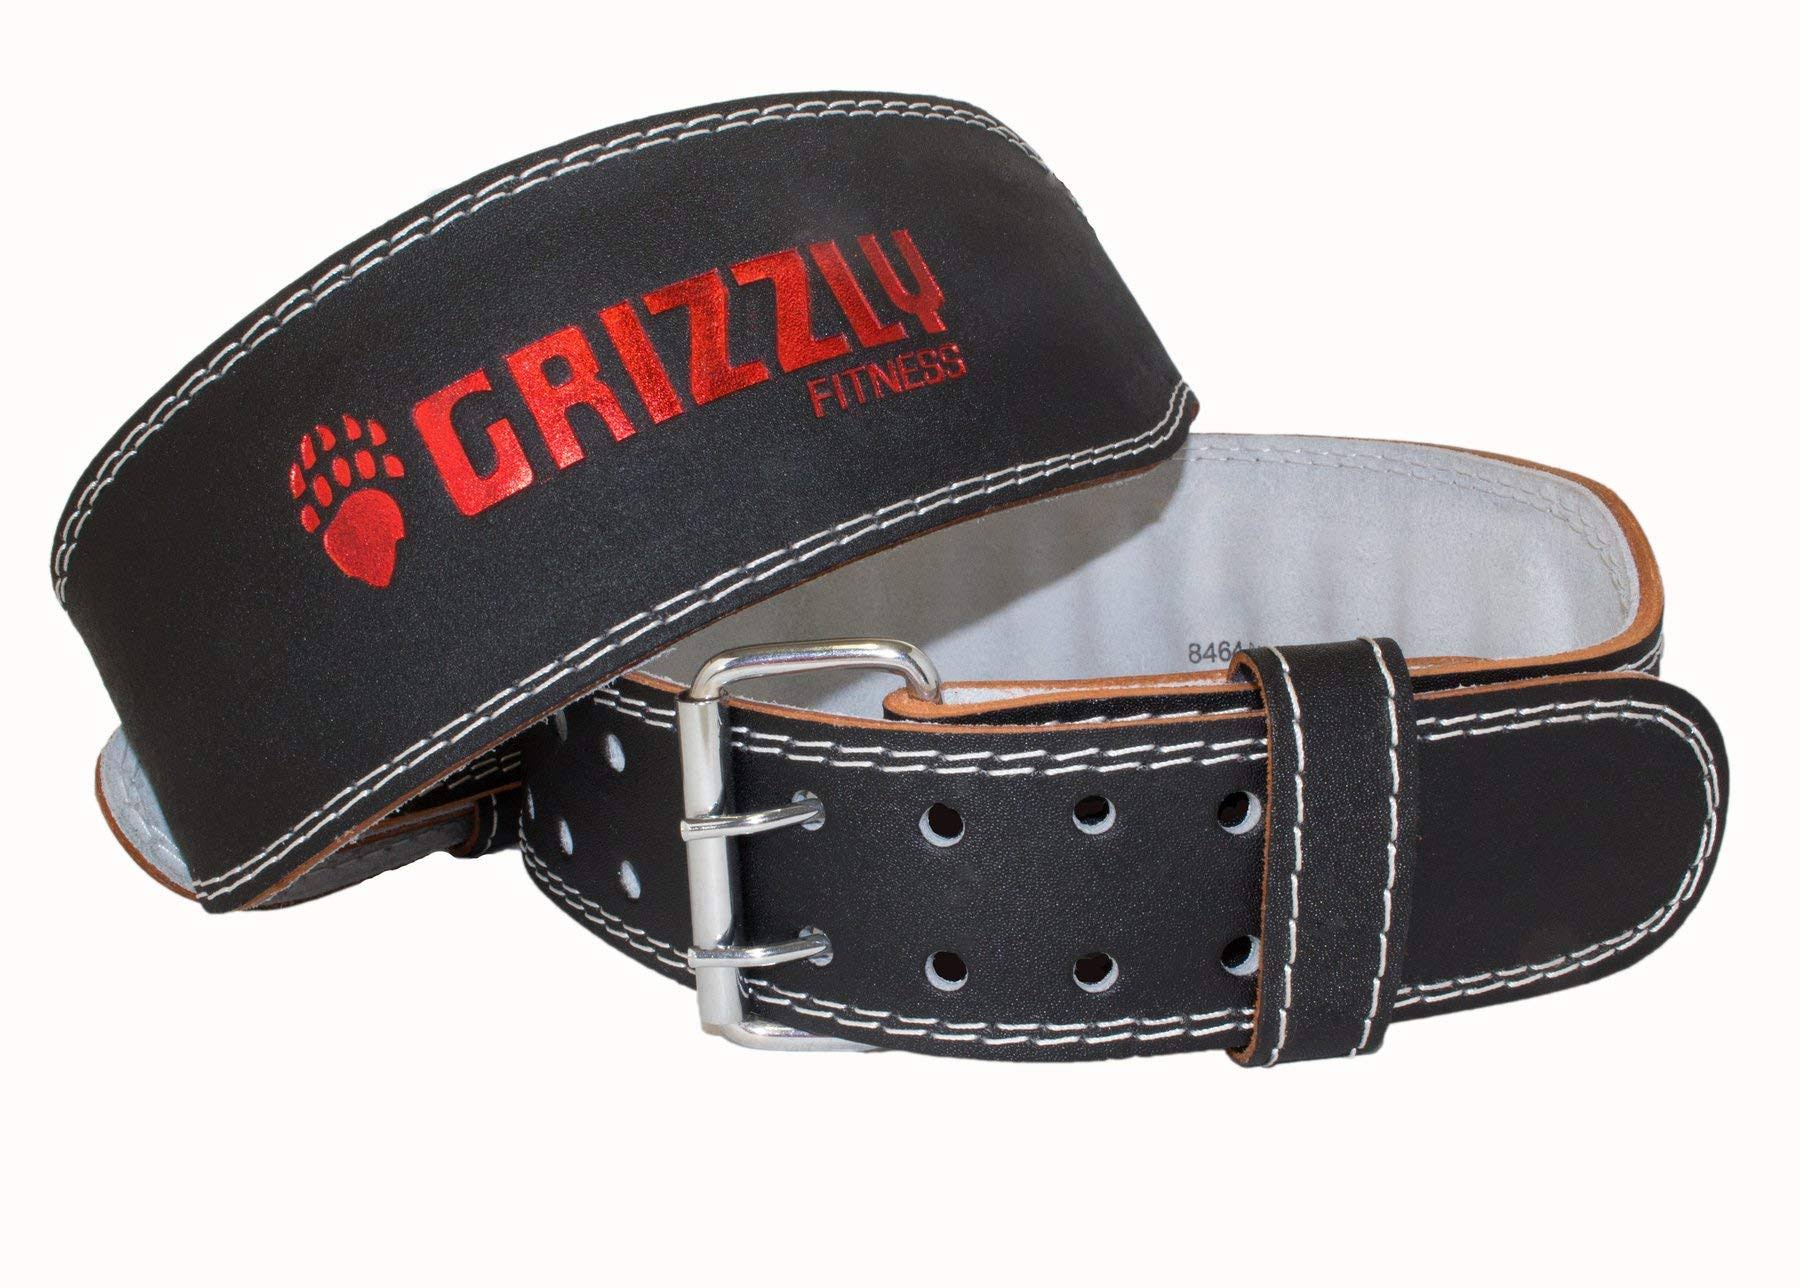 Grizzly Fitness Padded Enforcer Training Belt - Black, 6"